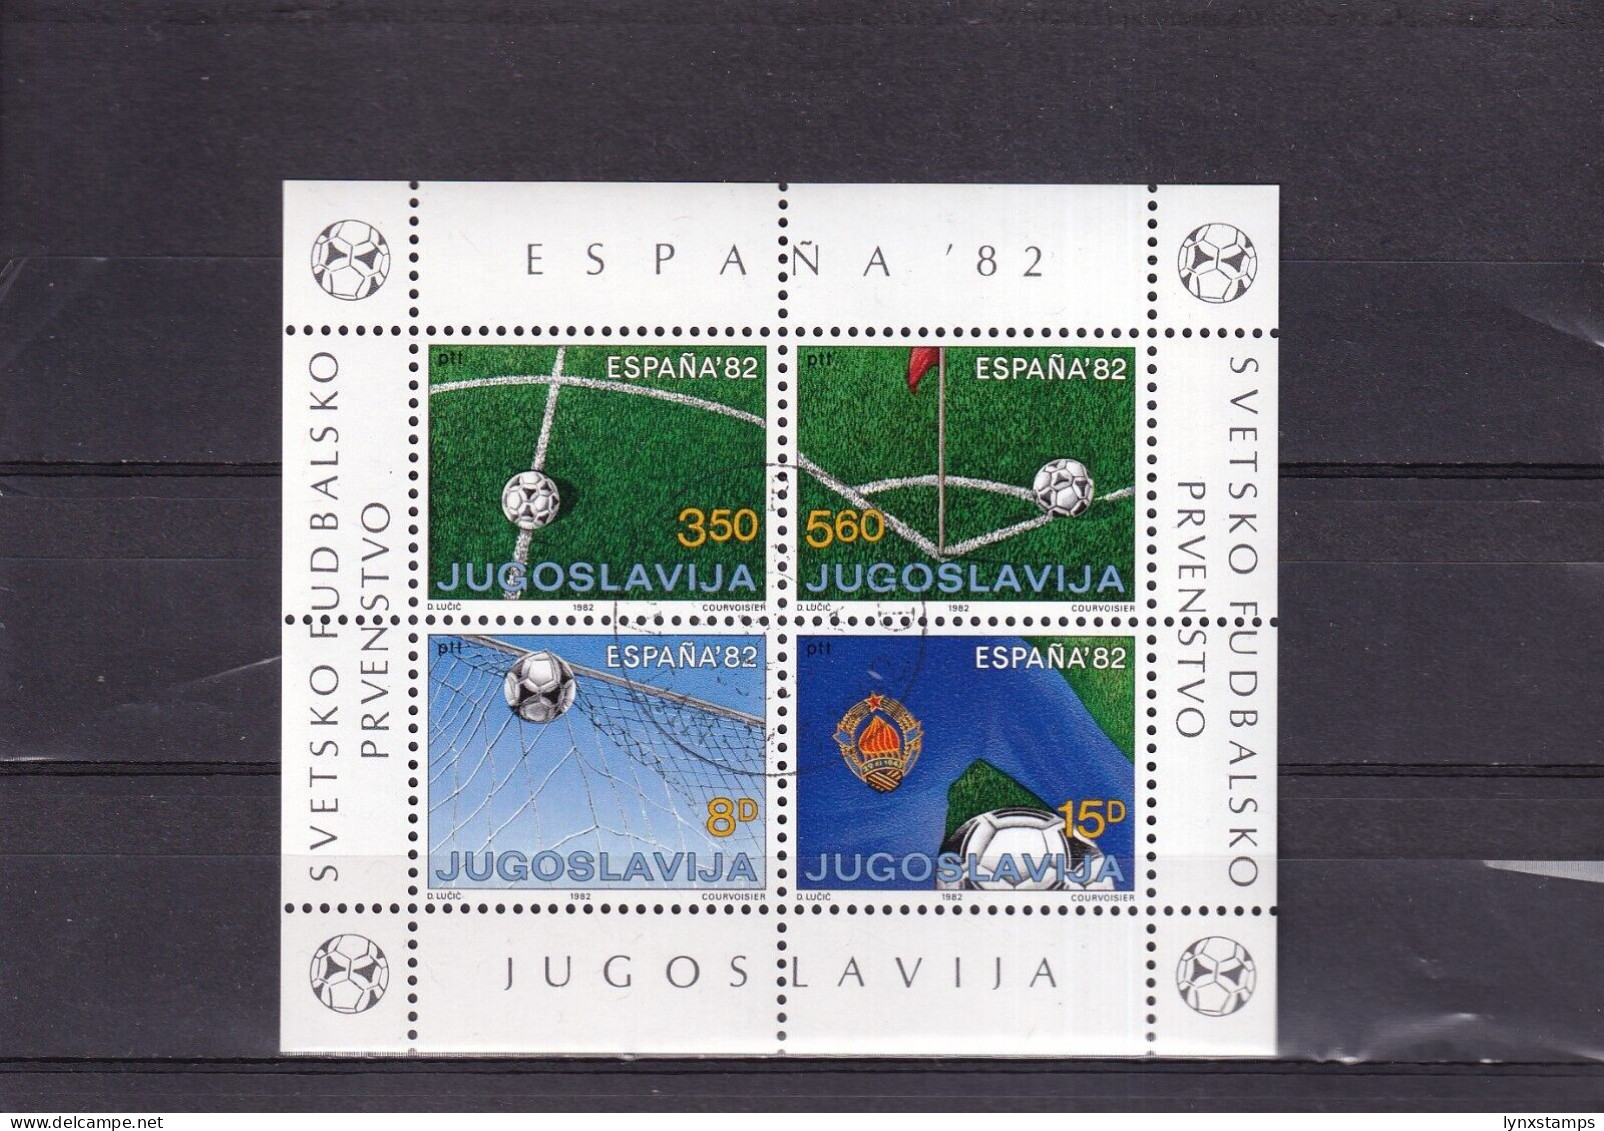 ER04 Yugoslavia 1982 FIFA World Cup MNH Minisheet - Used Stamps